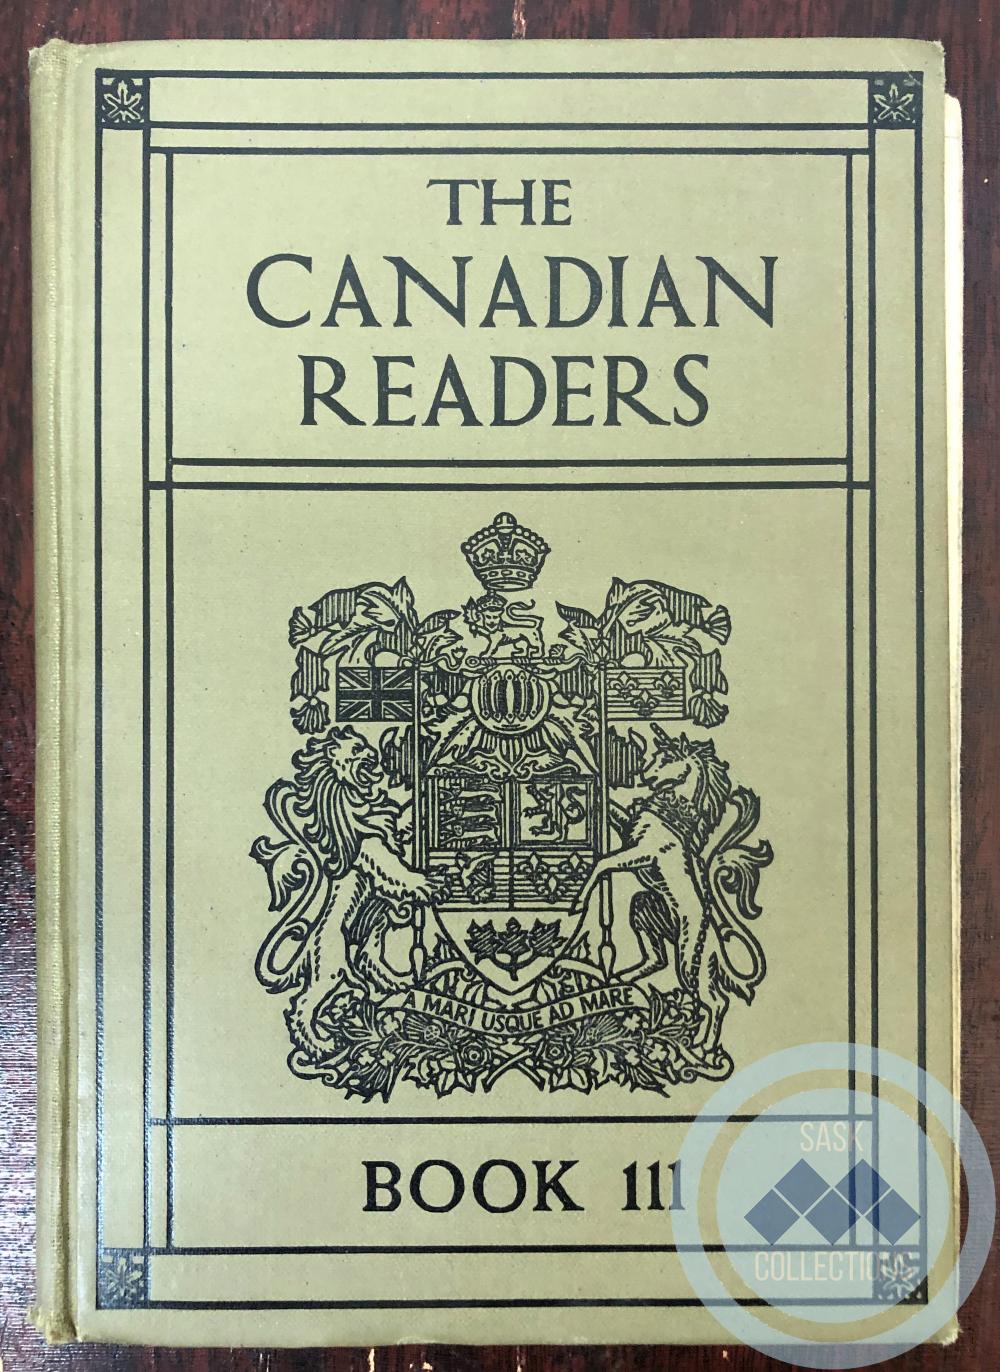 The Canadian Readers - Book III